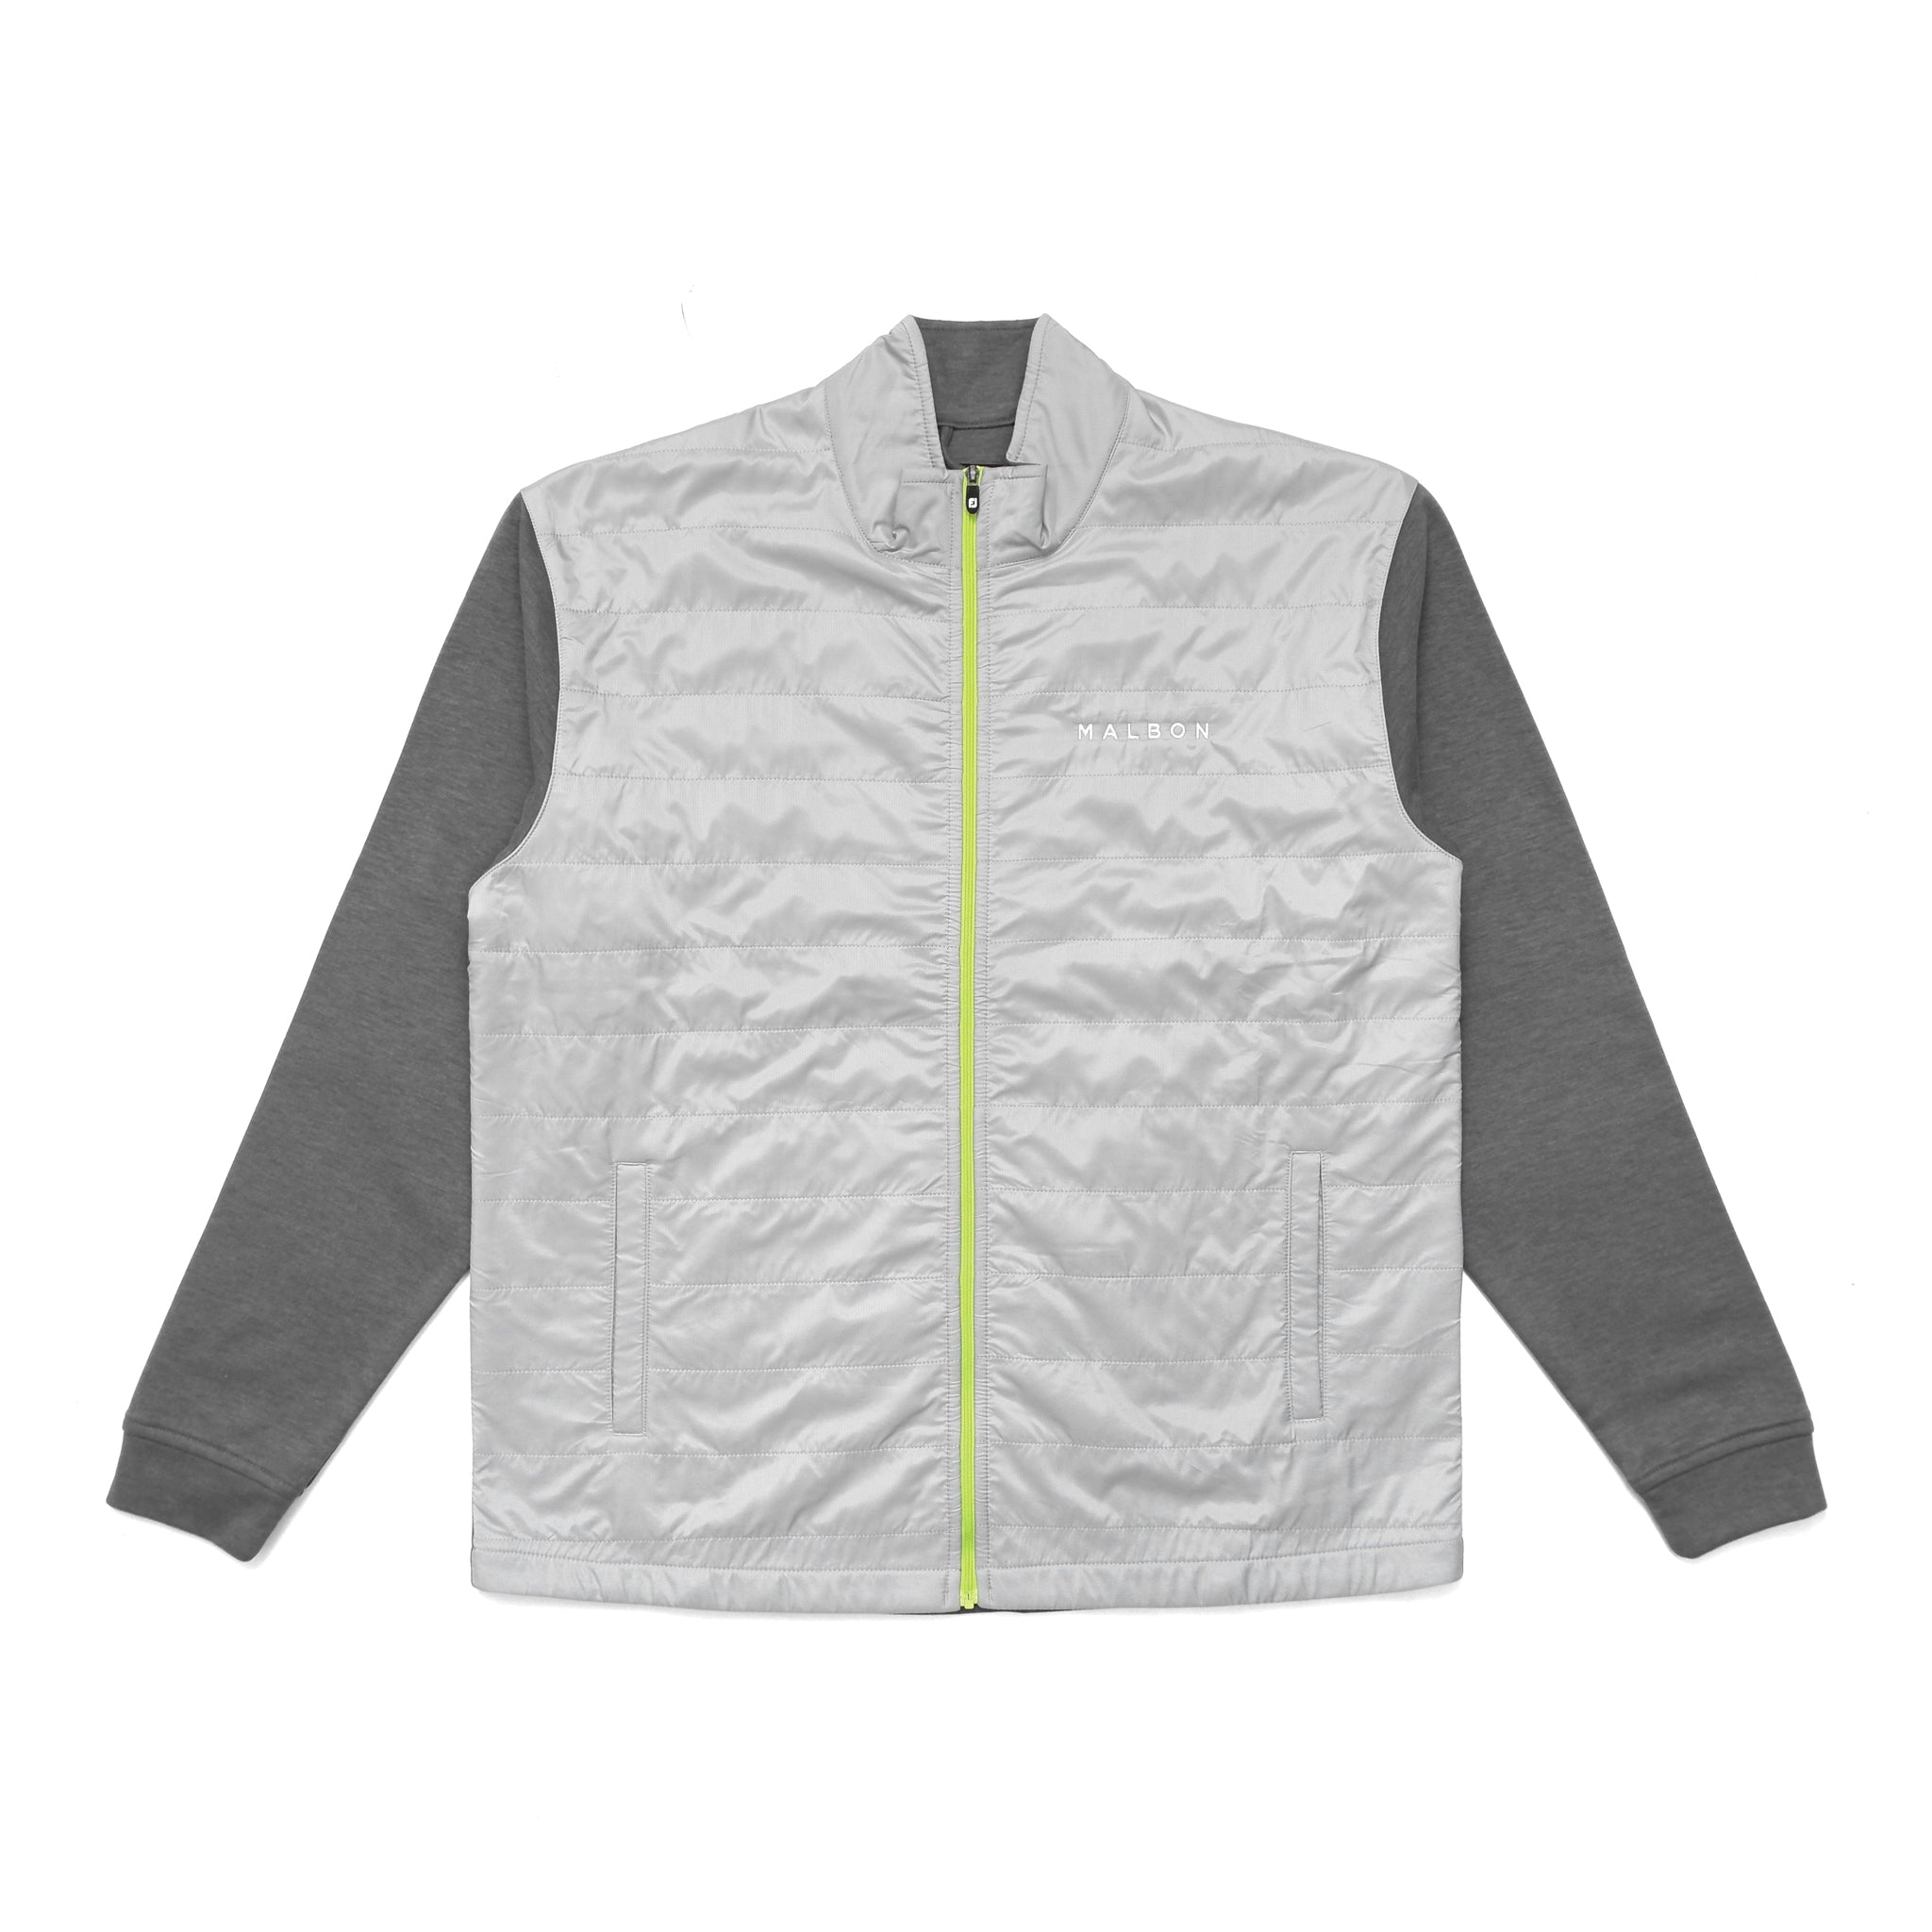 Pebble Beach Full-Zip Hybrid Jacket by FootJoy